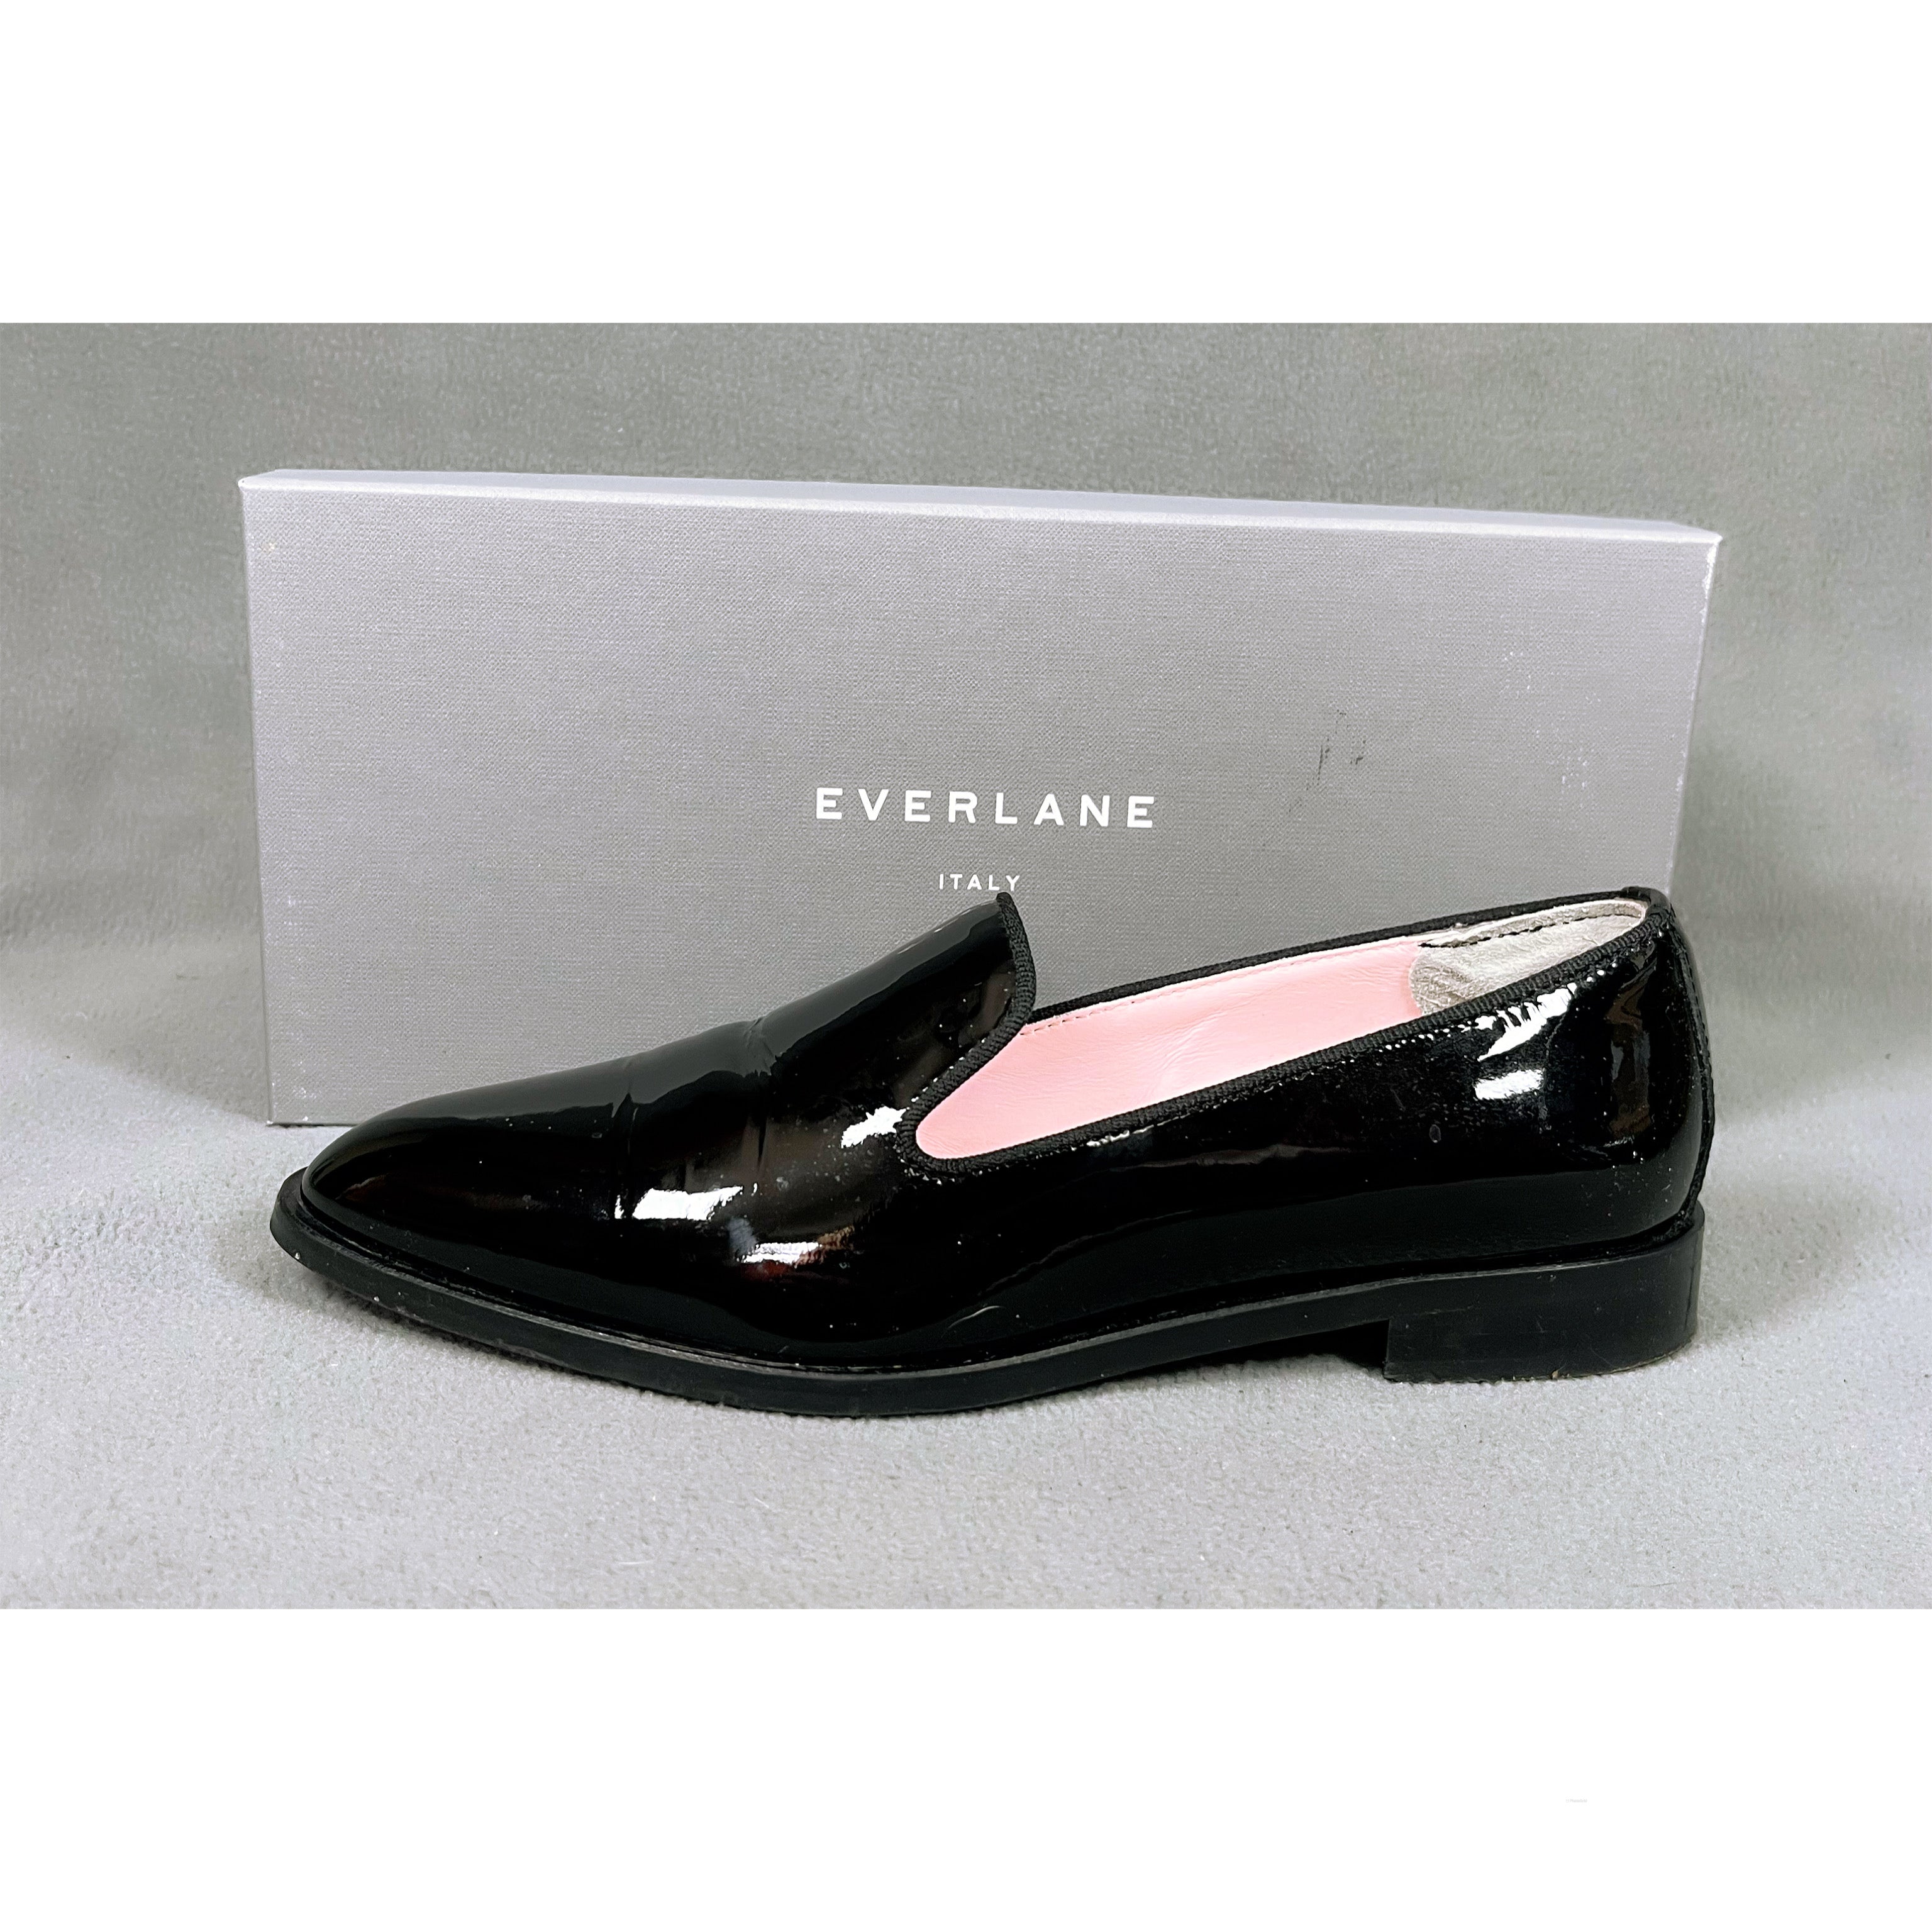 Everlane black patent loafer, size 7.5